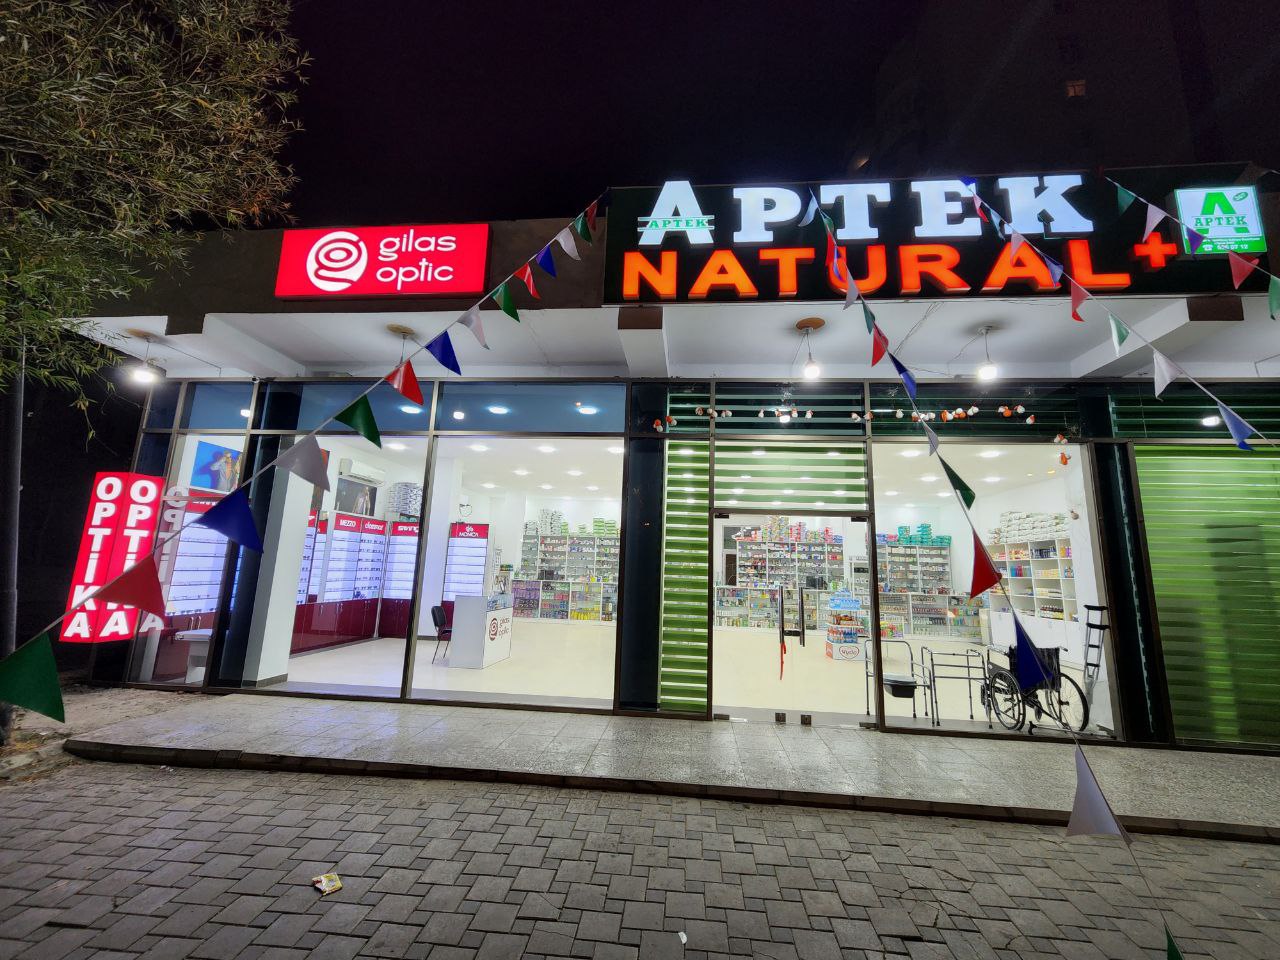 NaturalAptek